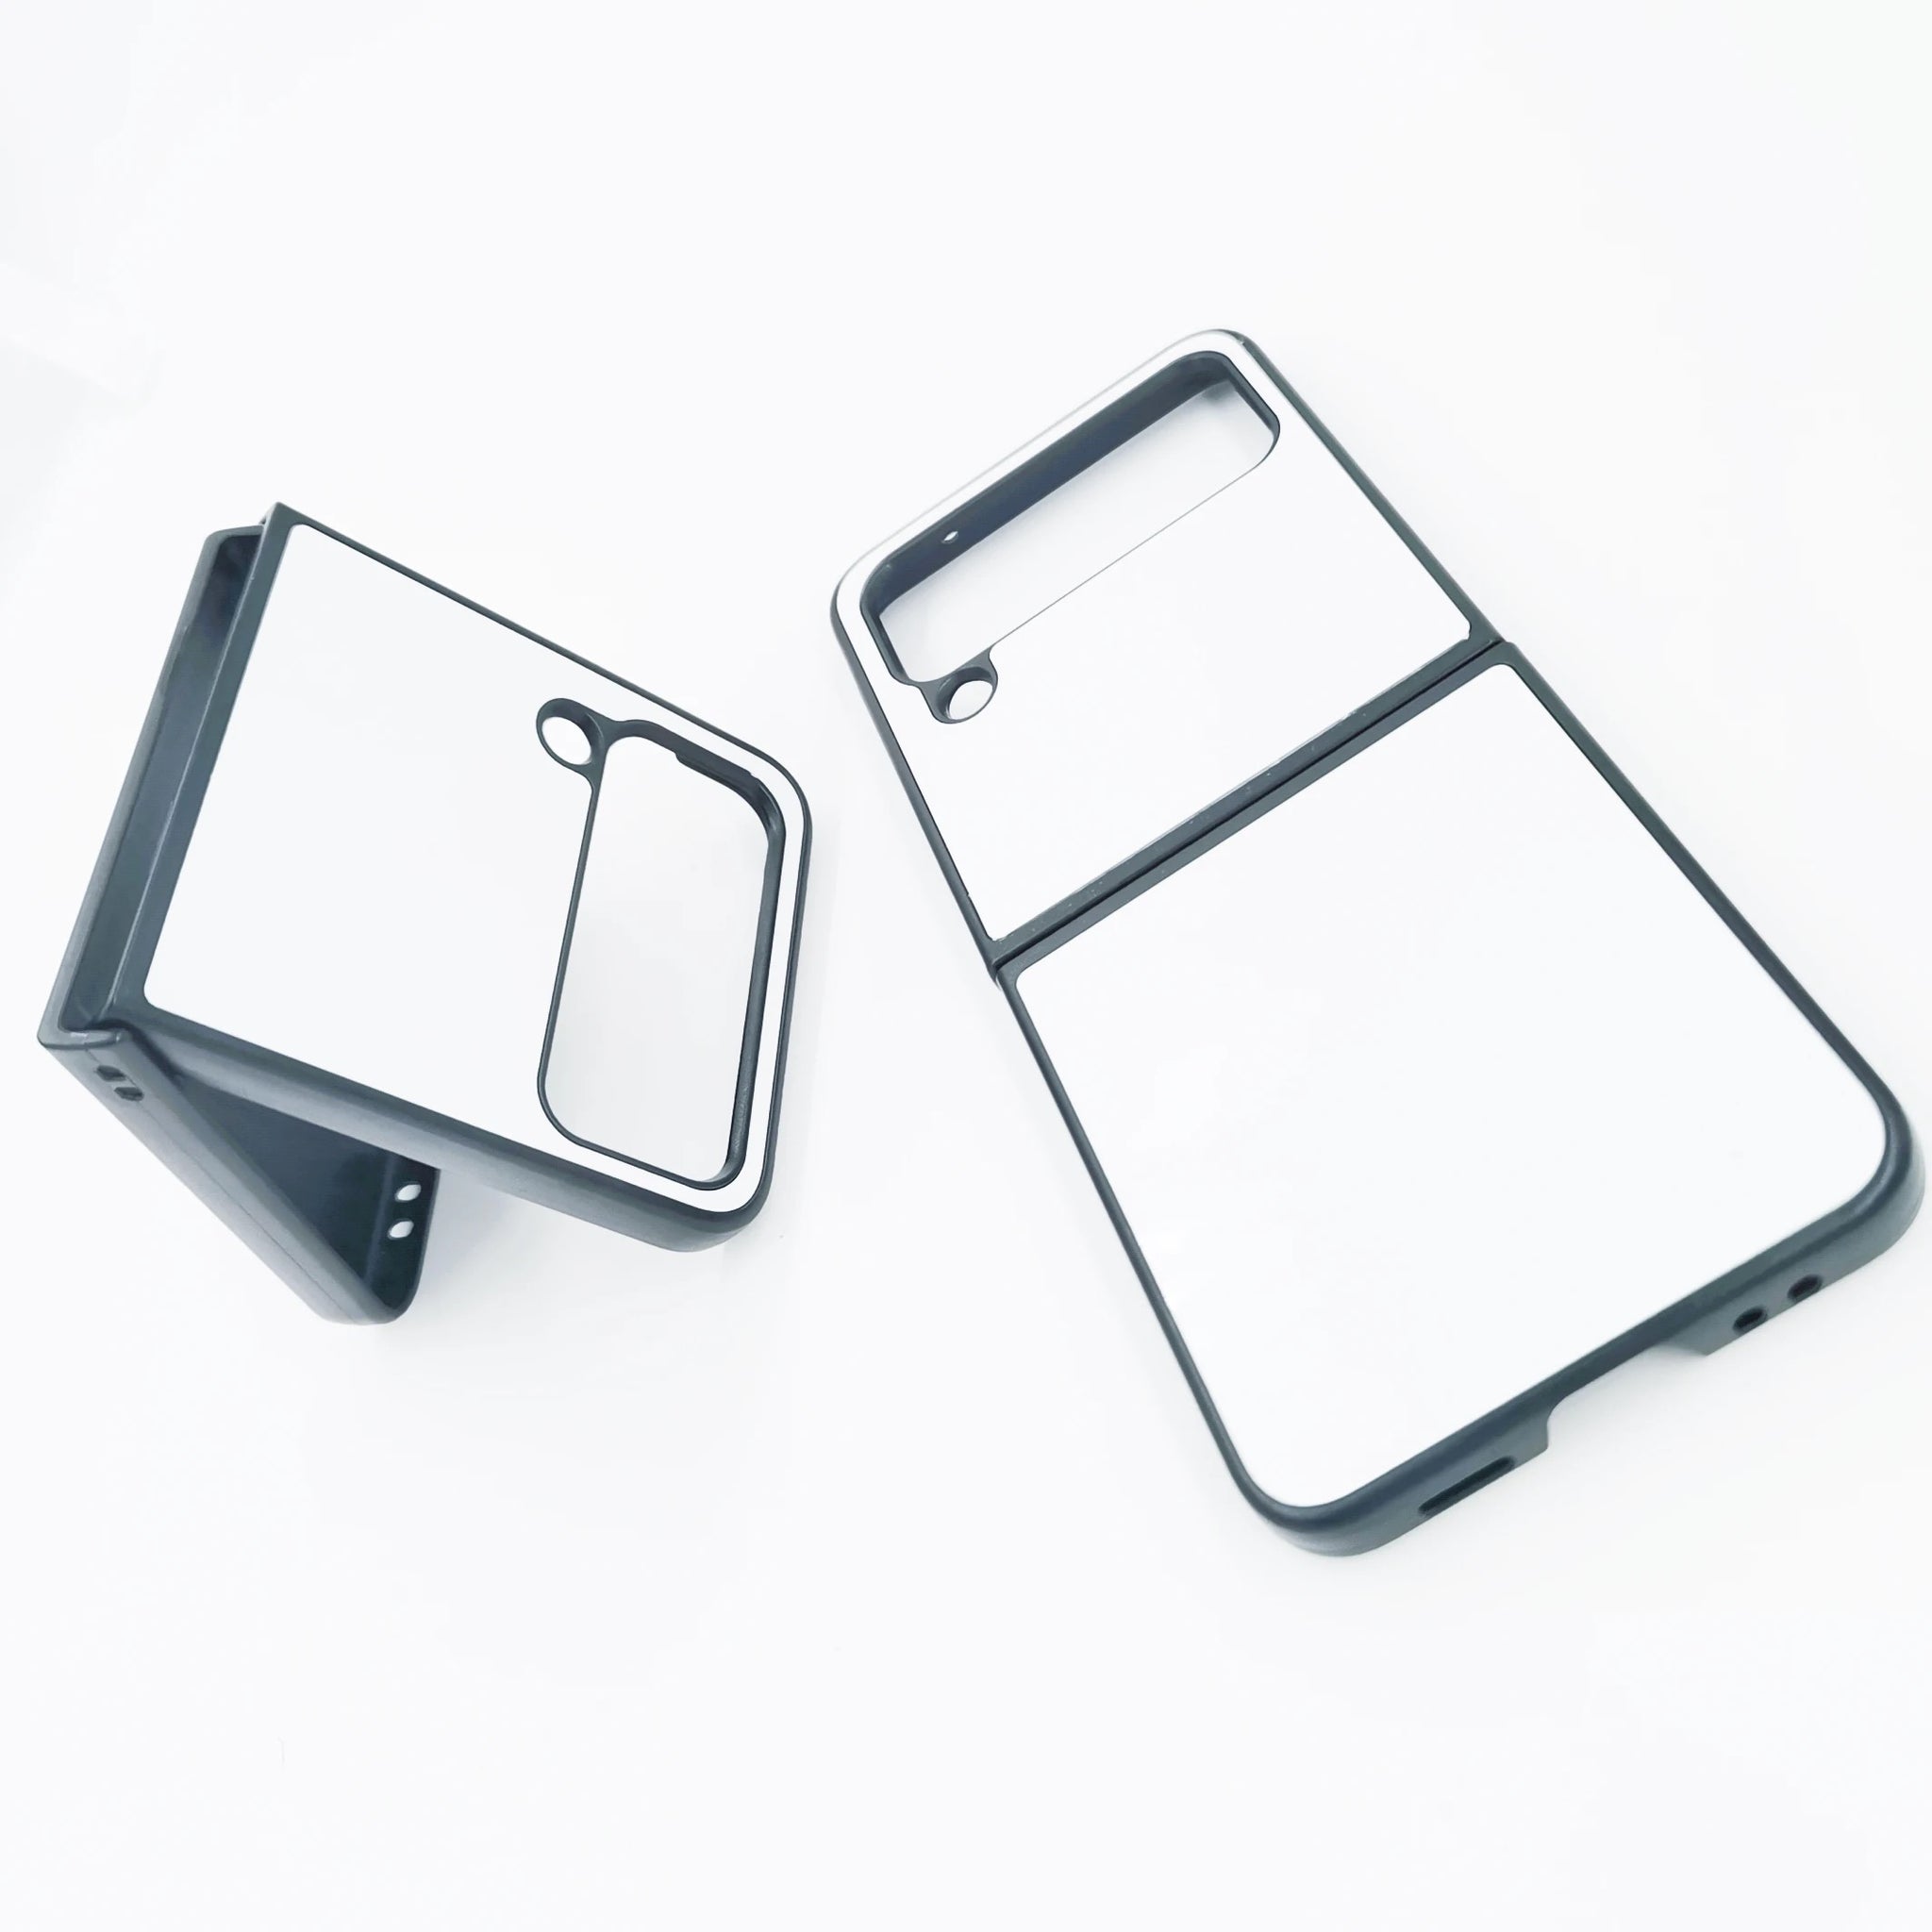 Samsung galaxy z flip aesthetic  Aesthetic phone case, Flip phone case,  Diy phone case